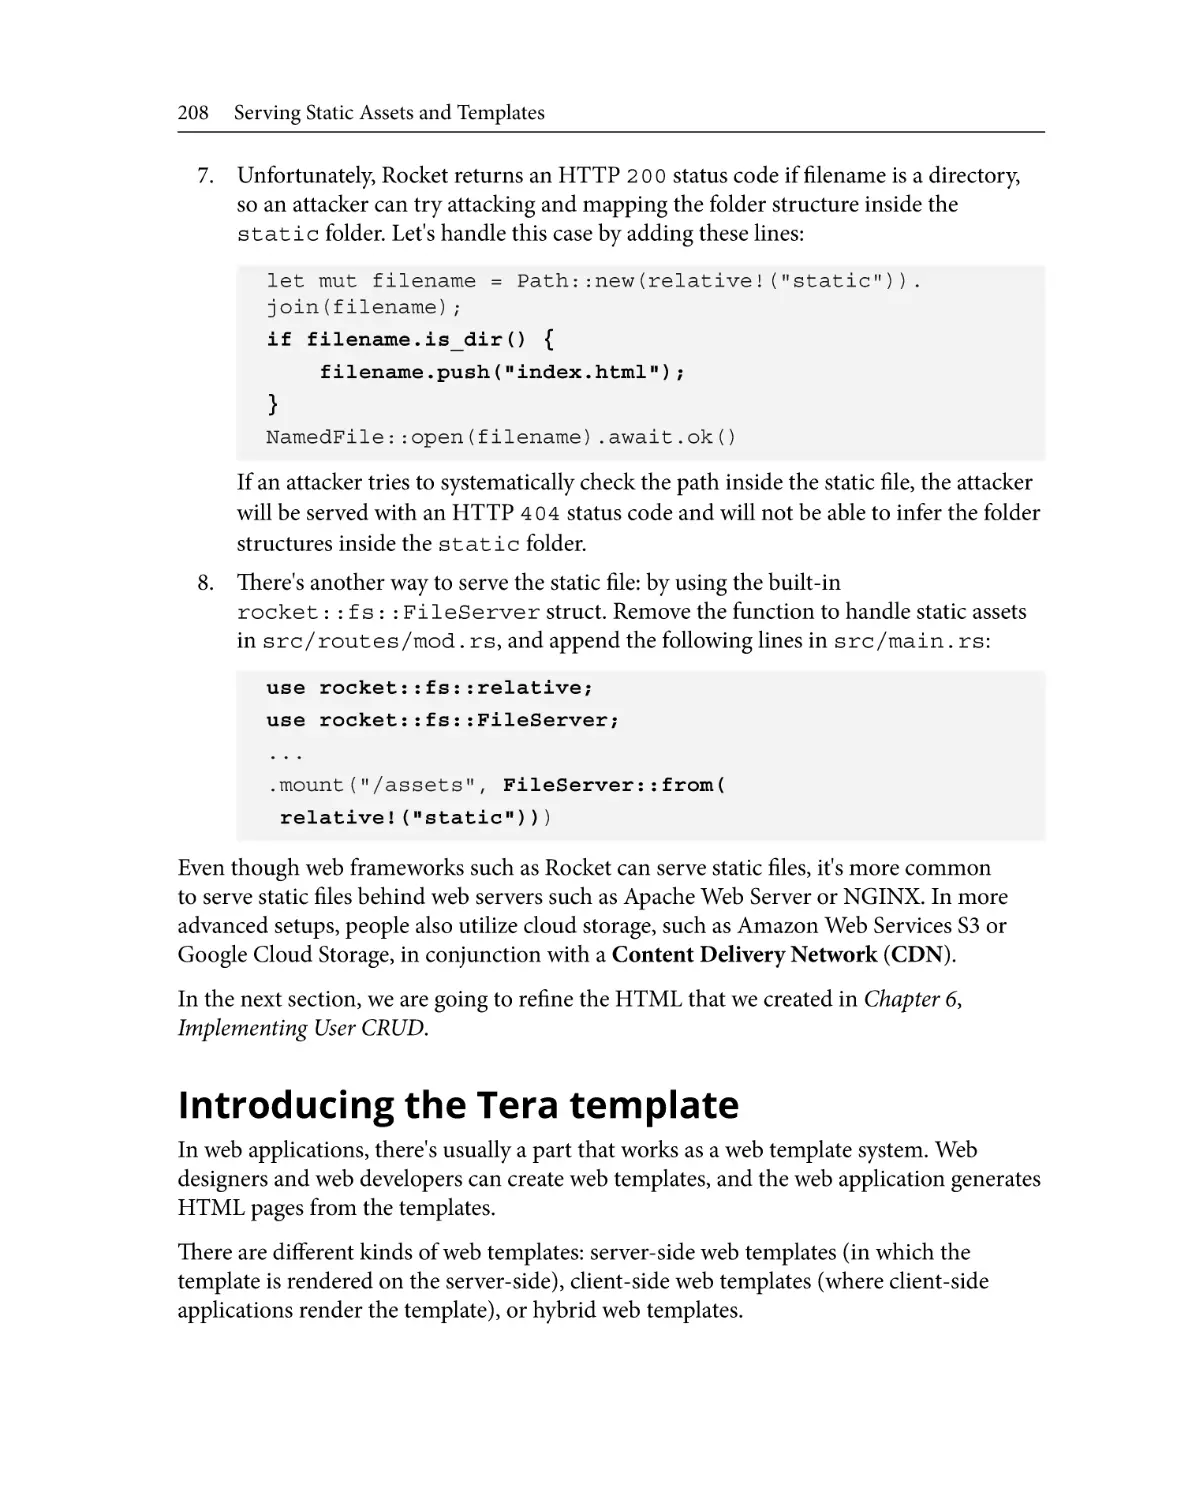 Introducing the Tera template